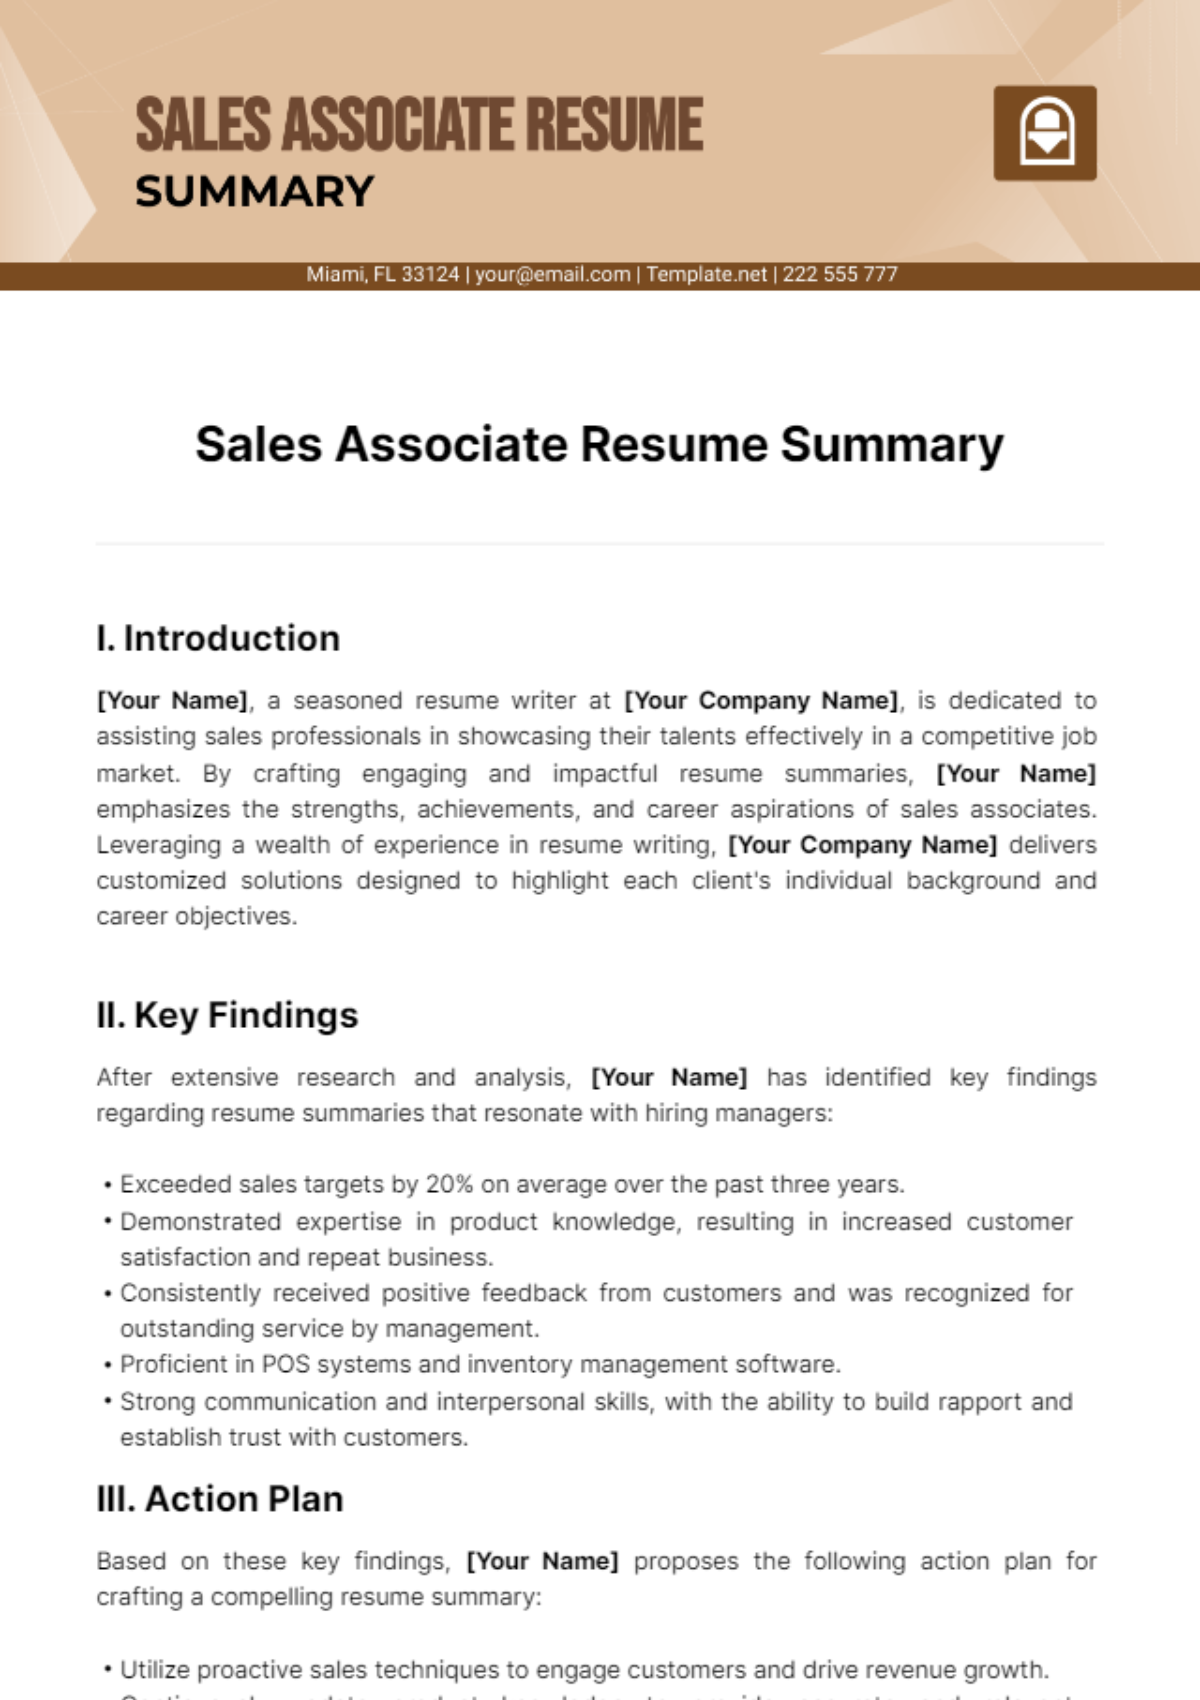 Sales Associate Resume Summary Template